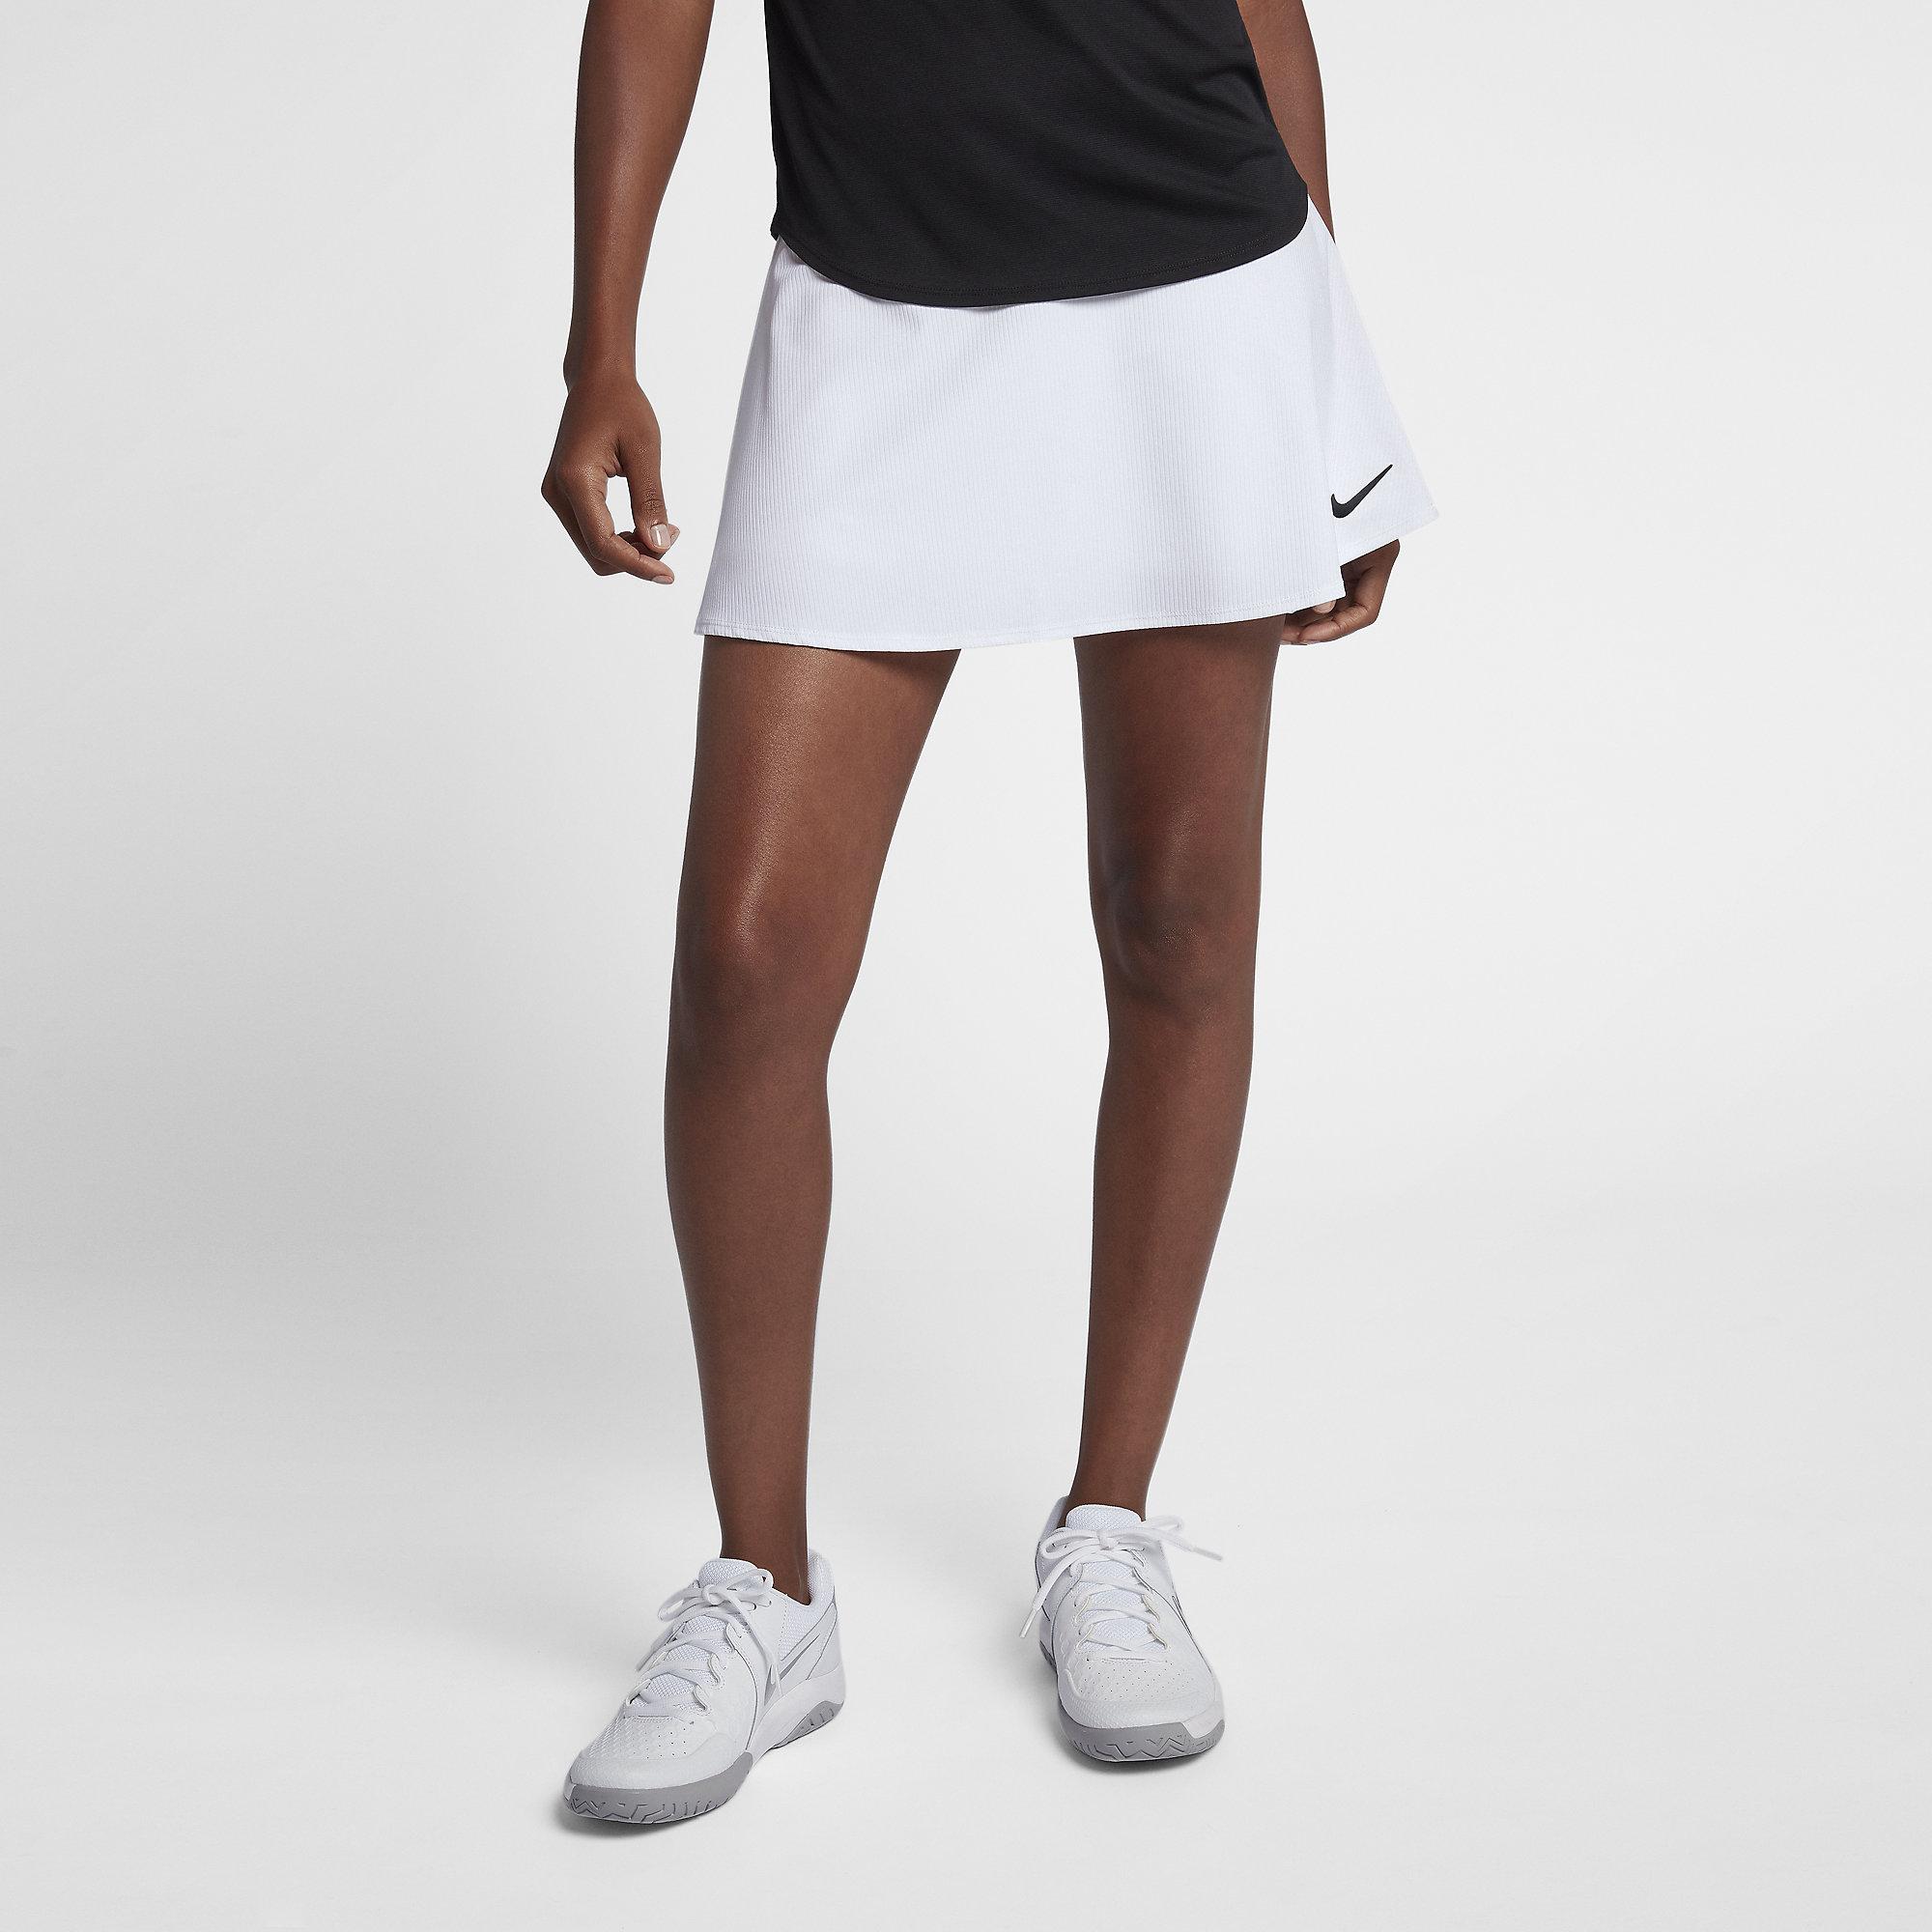 Nike Womens Dry Tennis Skort - White 